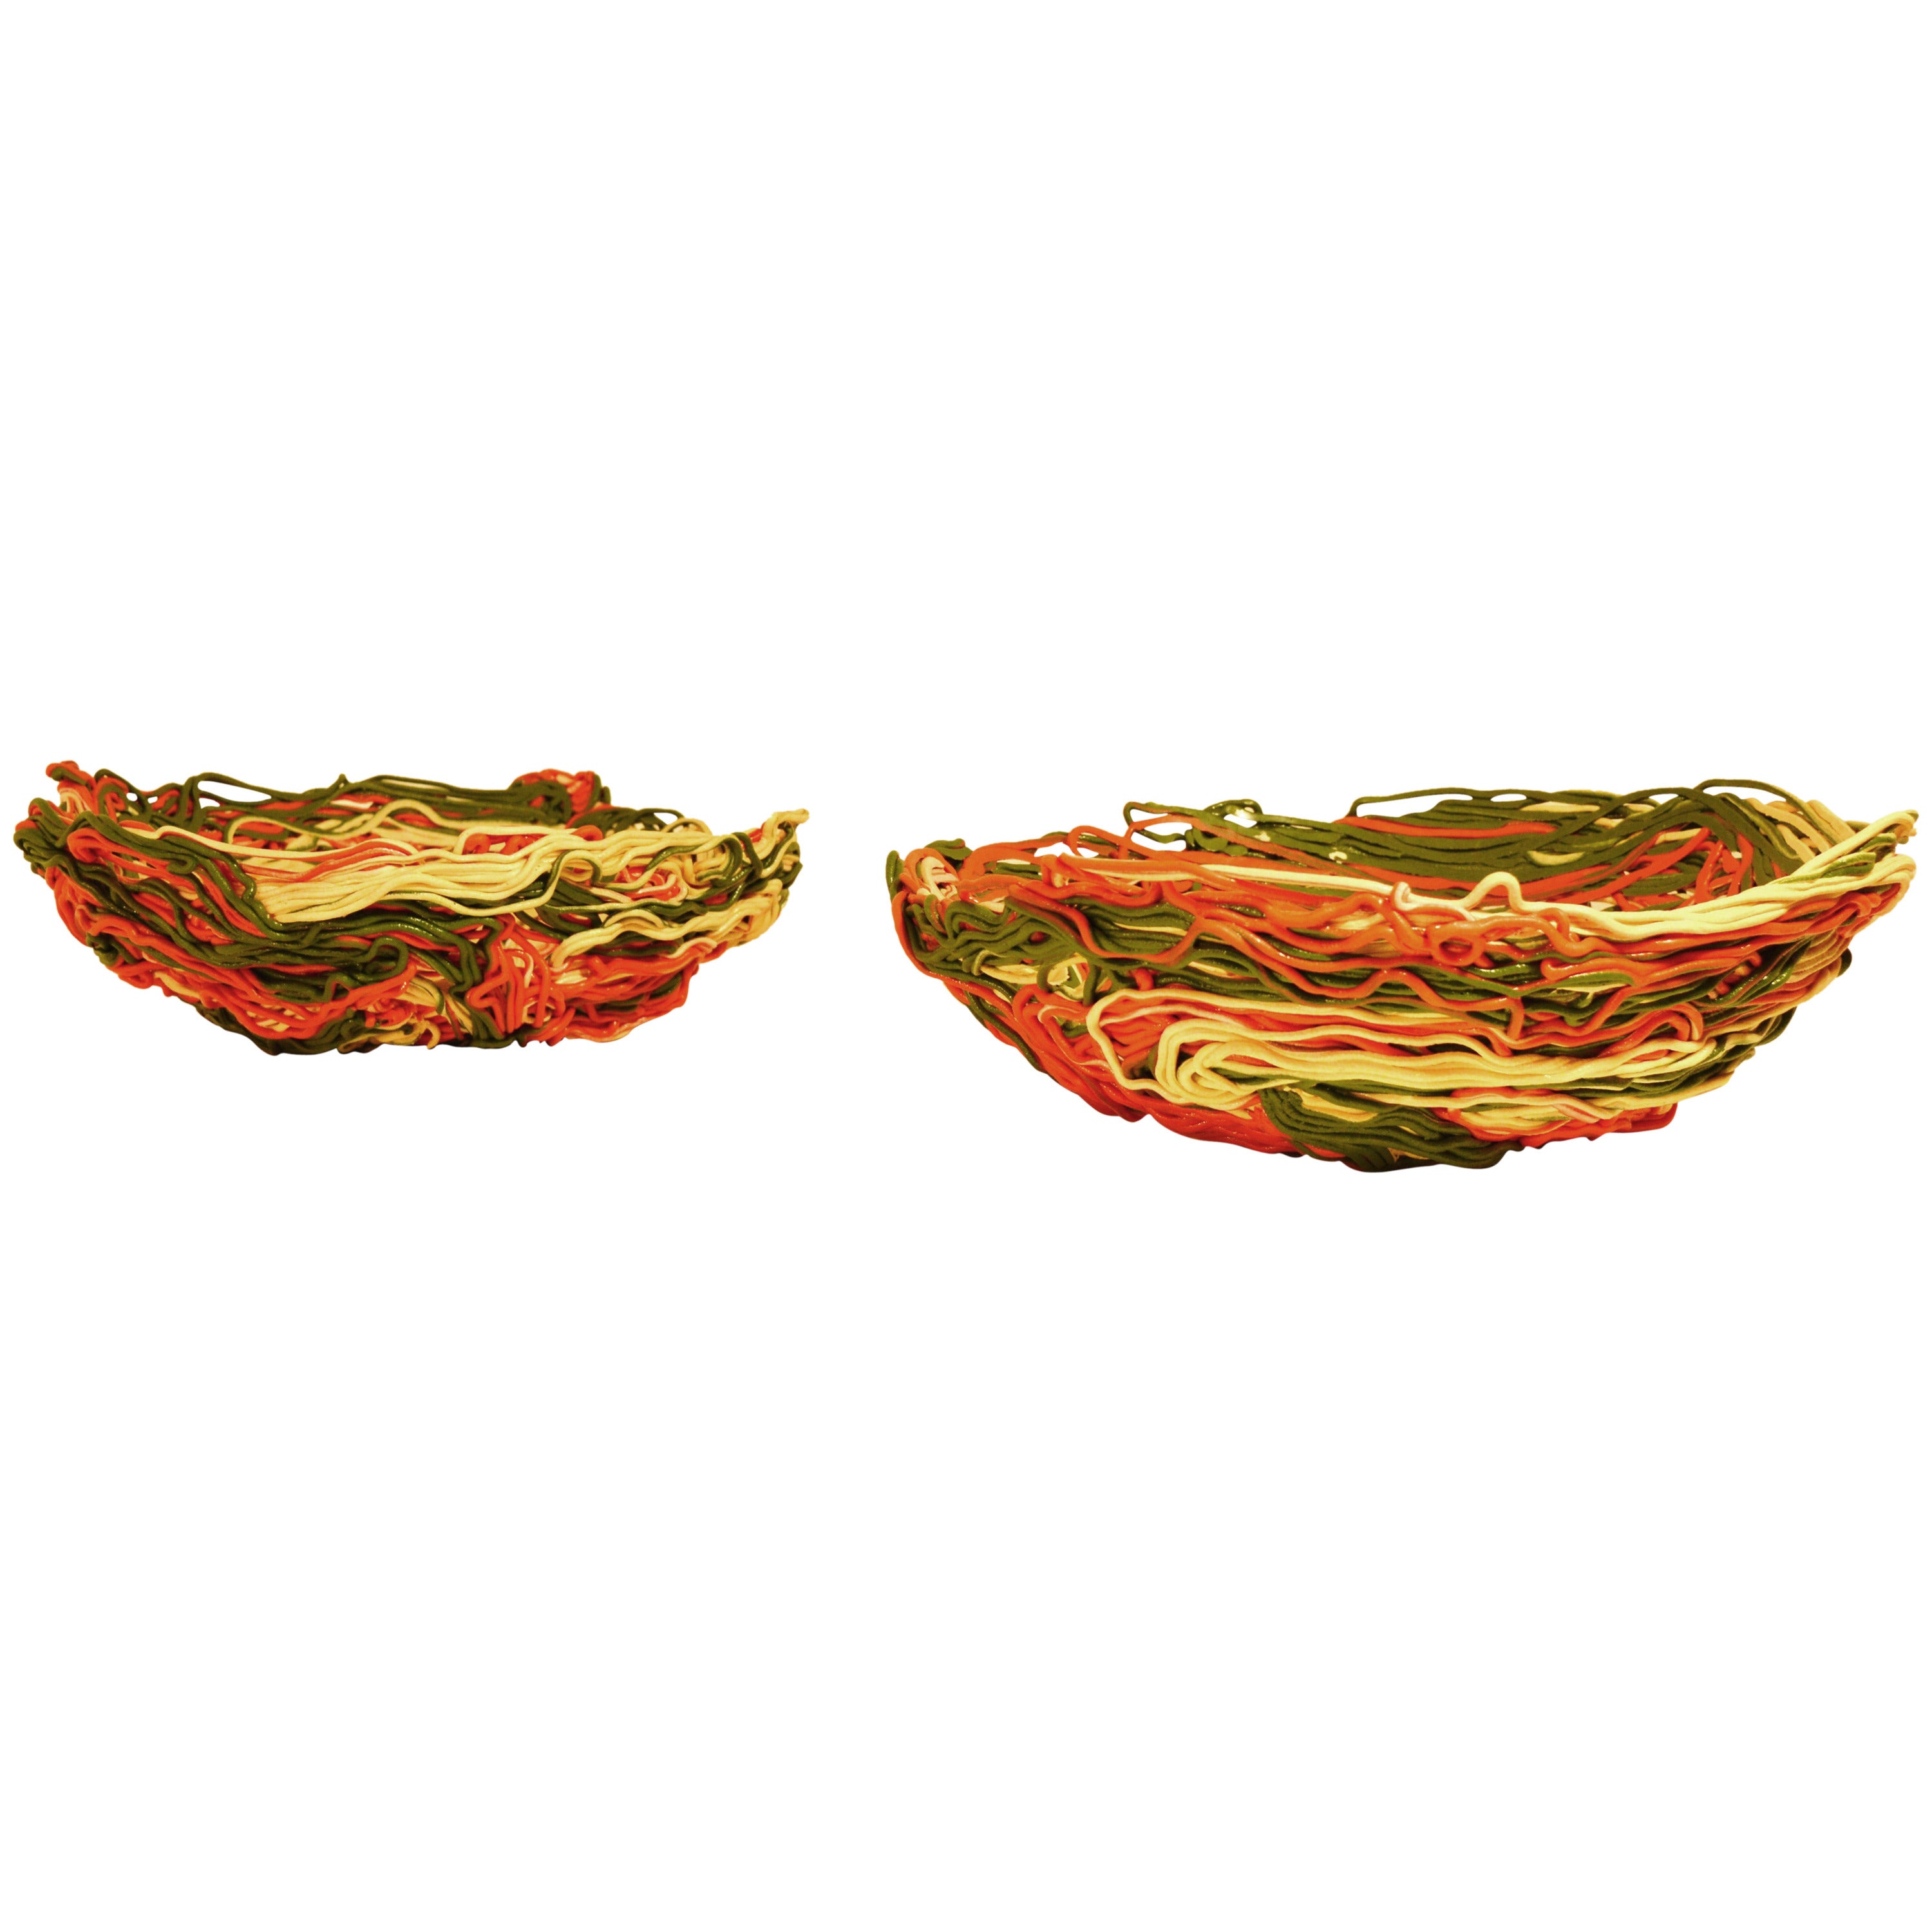 Pair of Gaetano Pesce Baskets for Fish Design